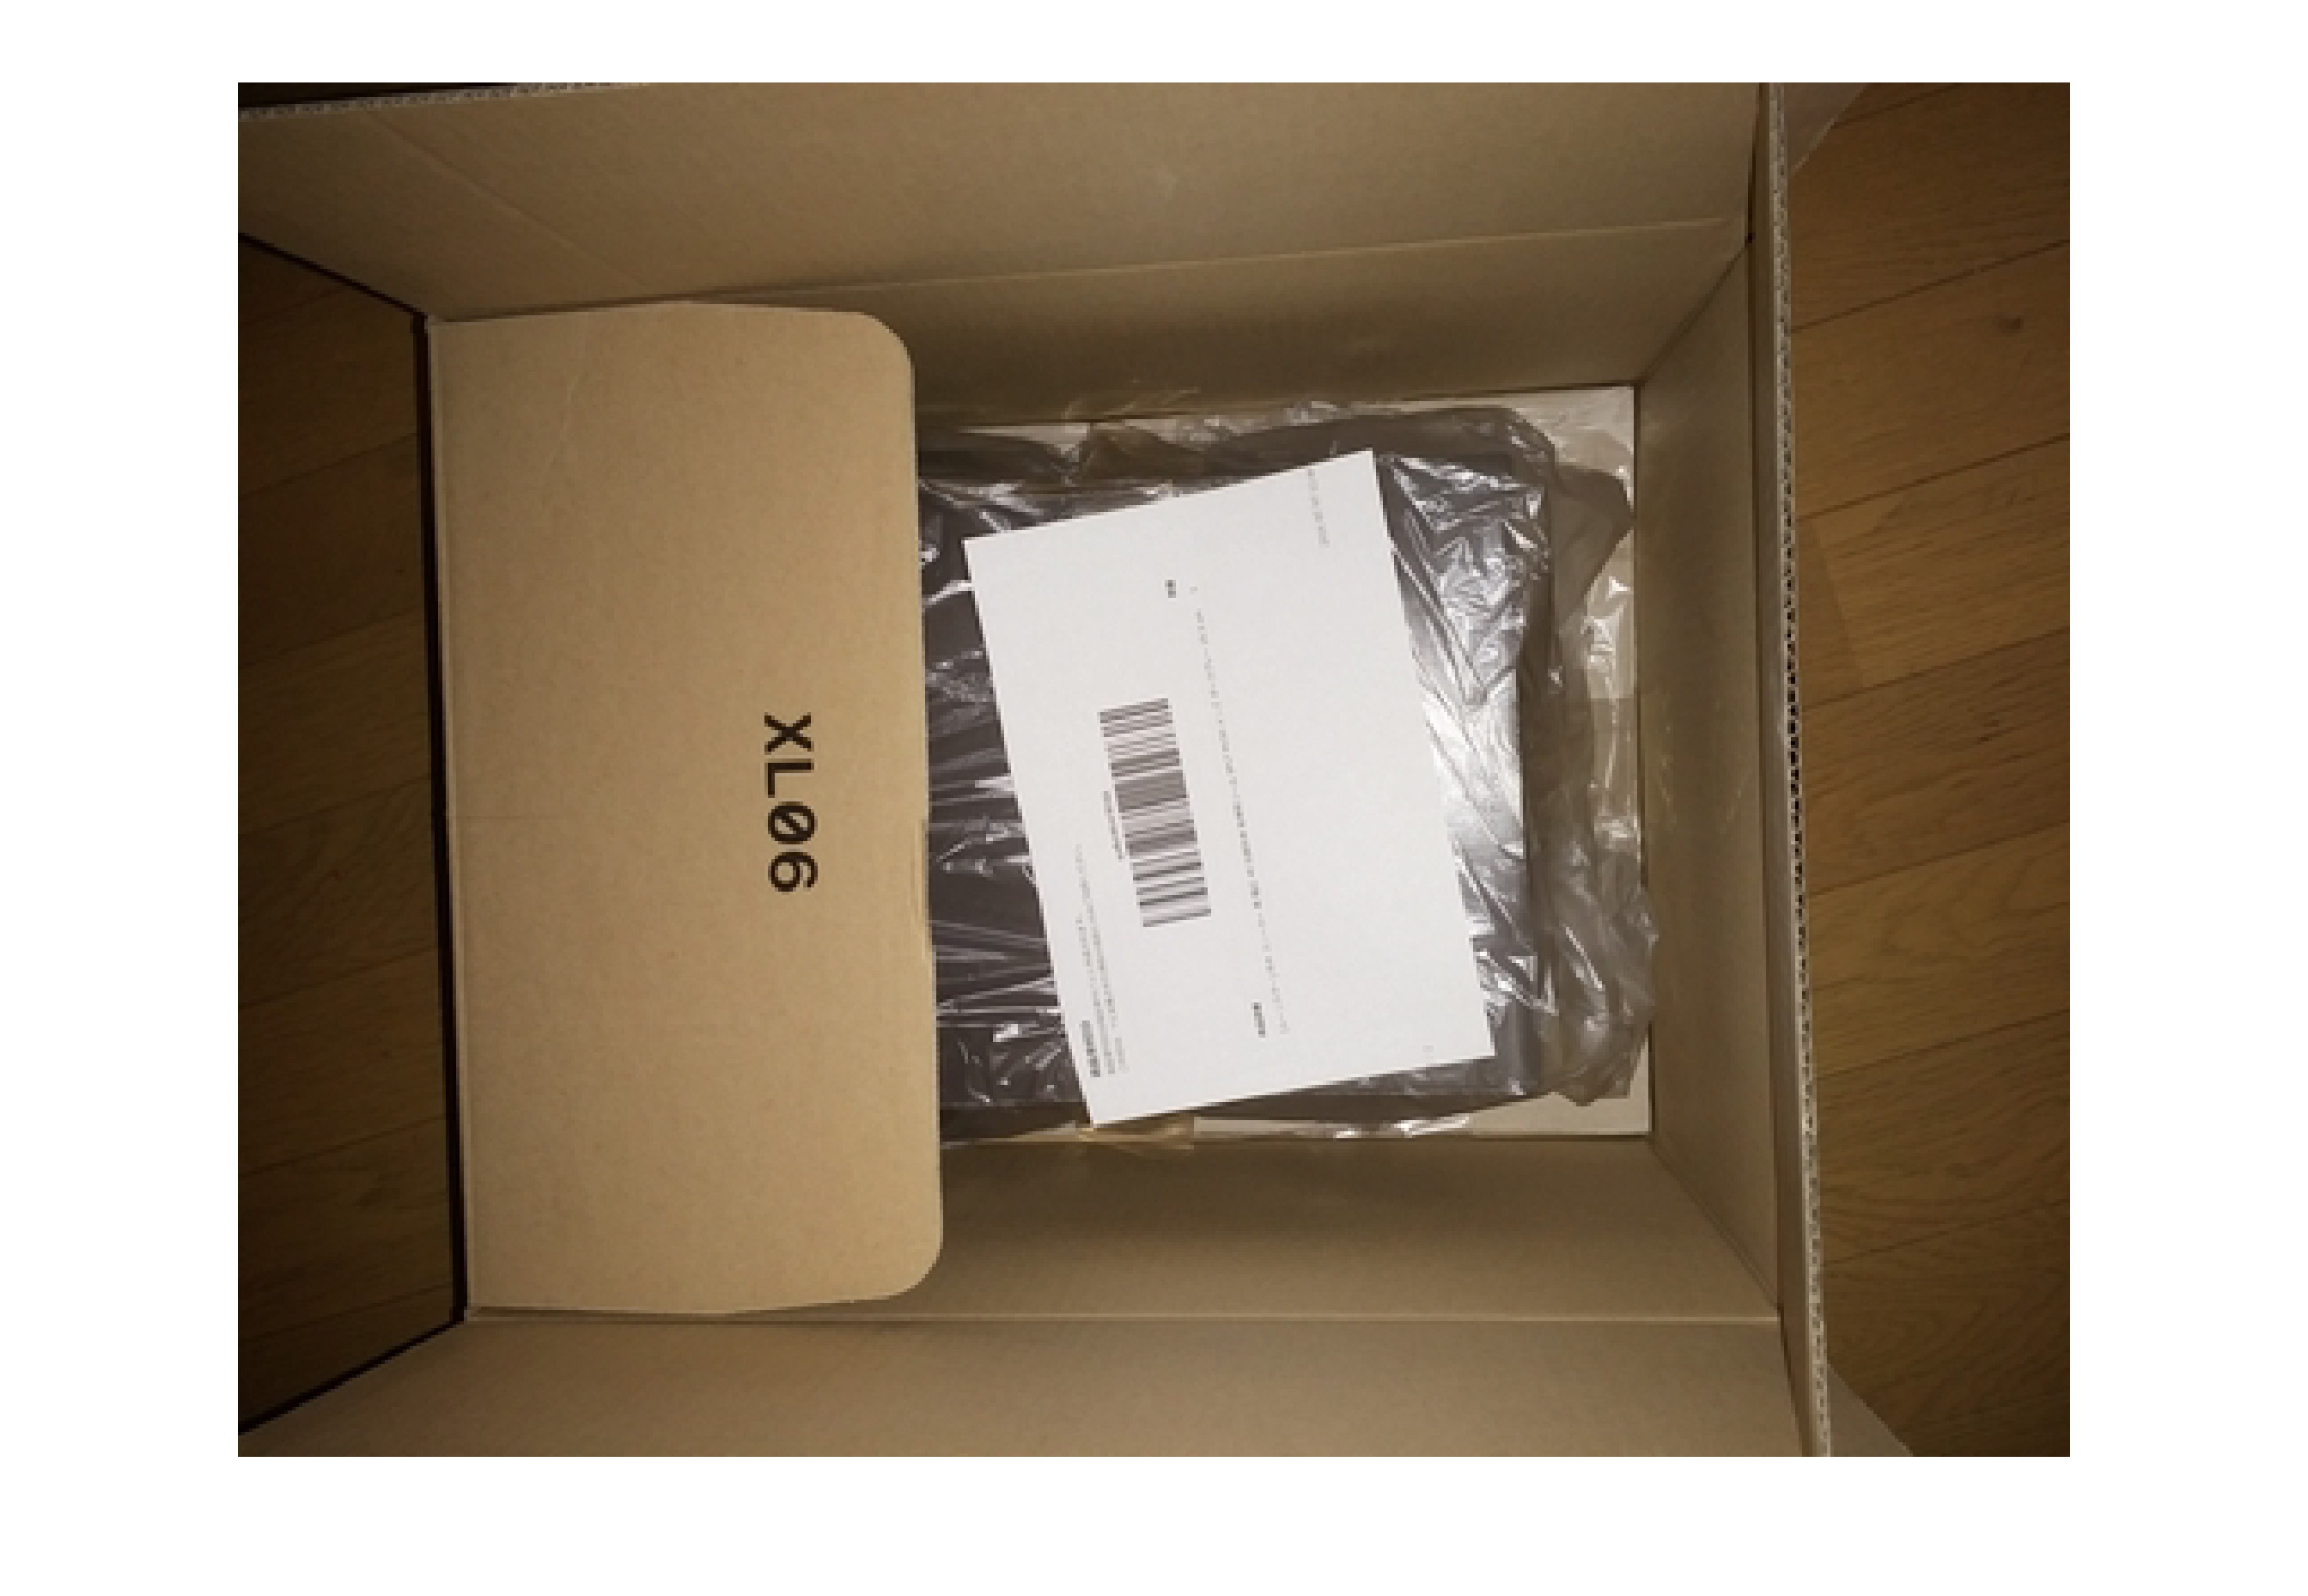 Amazonの返品手続きは簡単 返品のやり方から日本郵便の集荷依頼まで手続きをまとめ